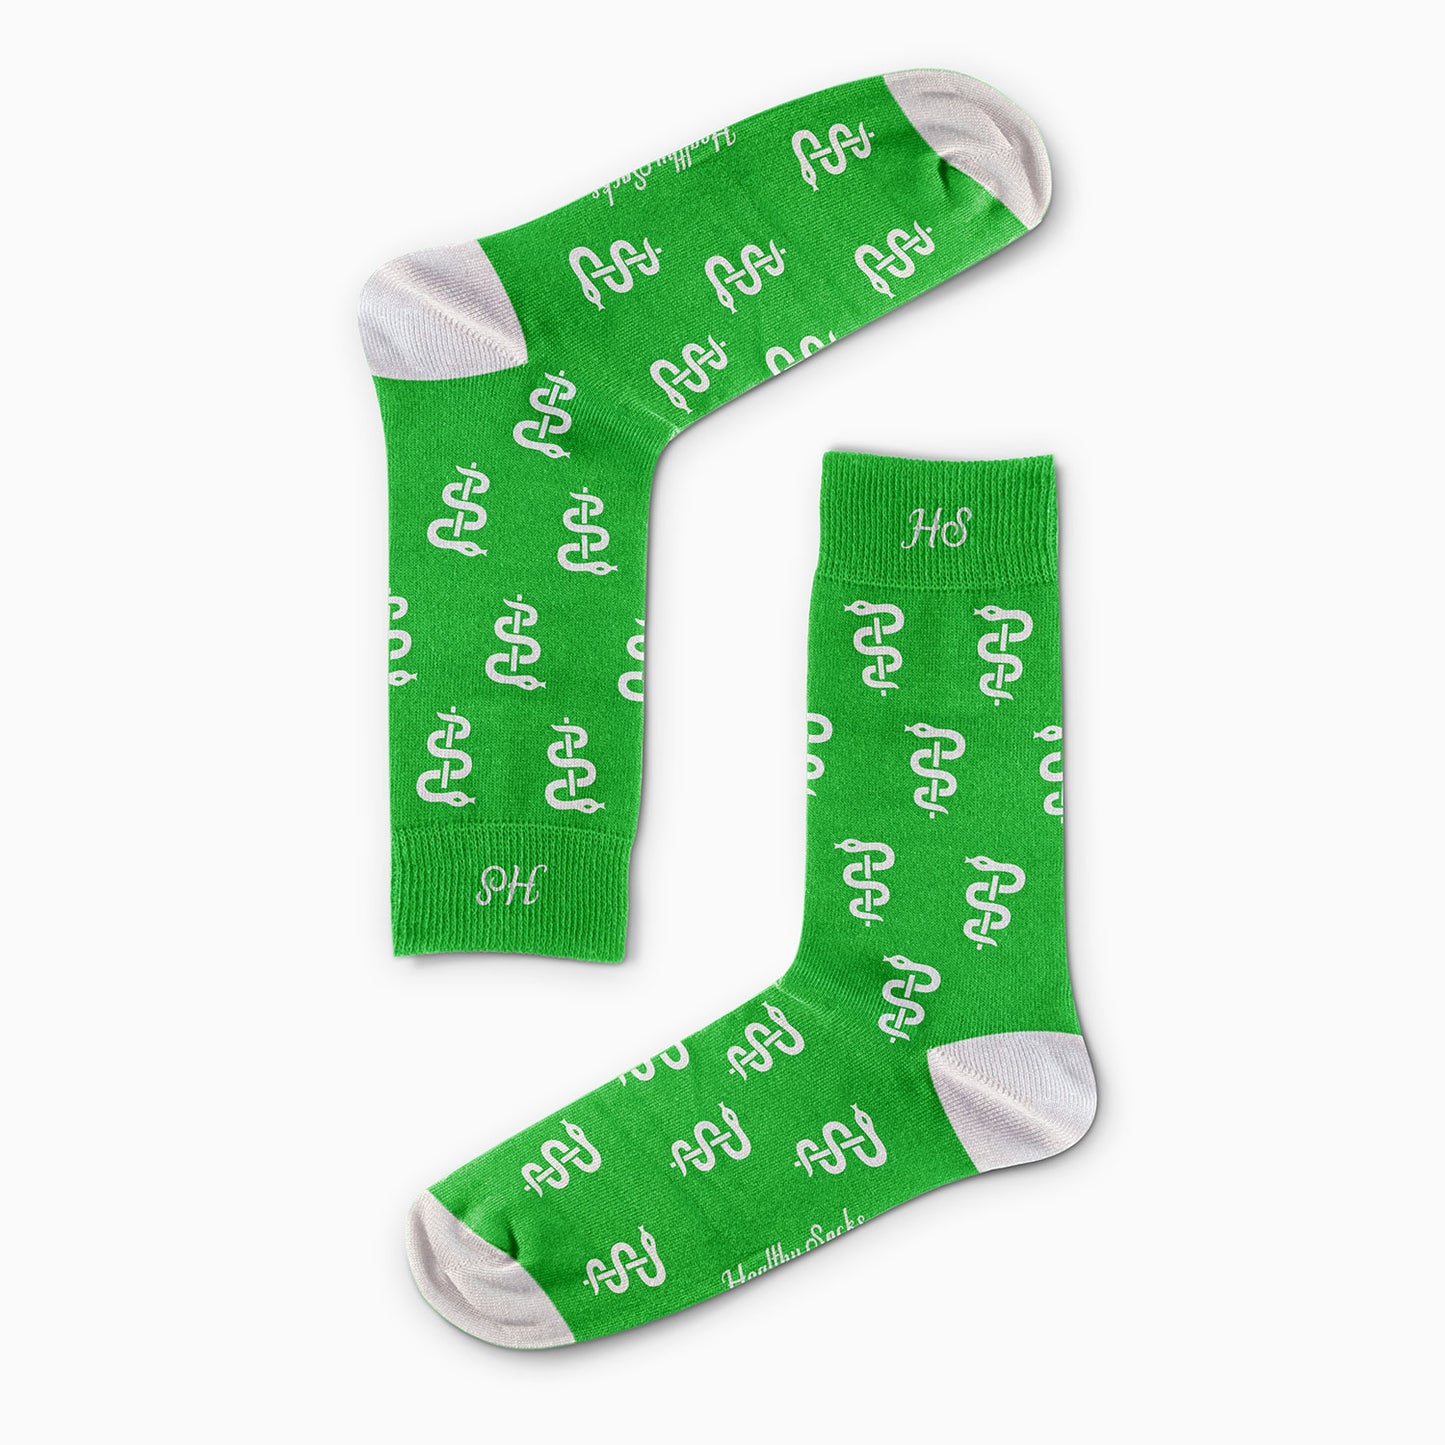 Esculaap Socke – Grün